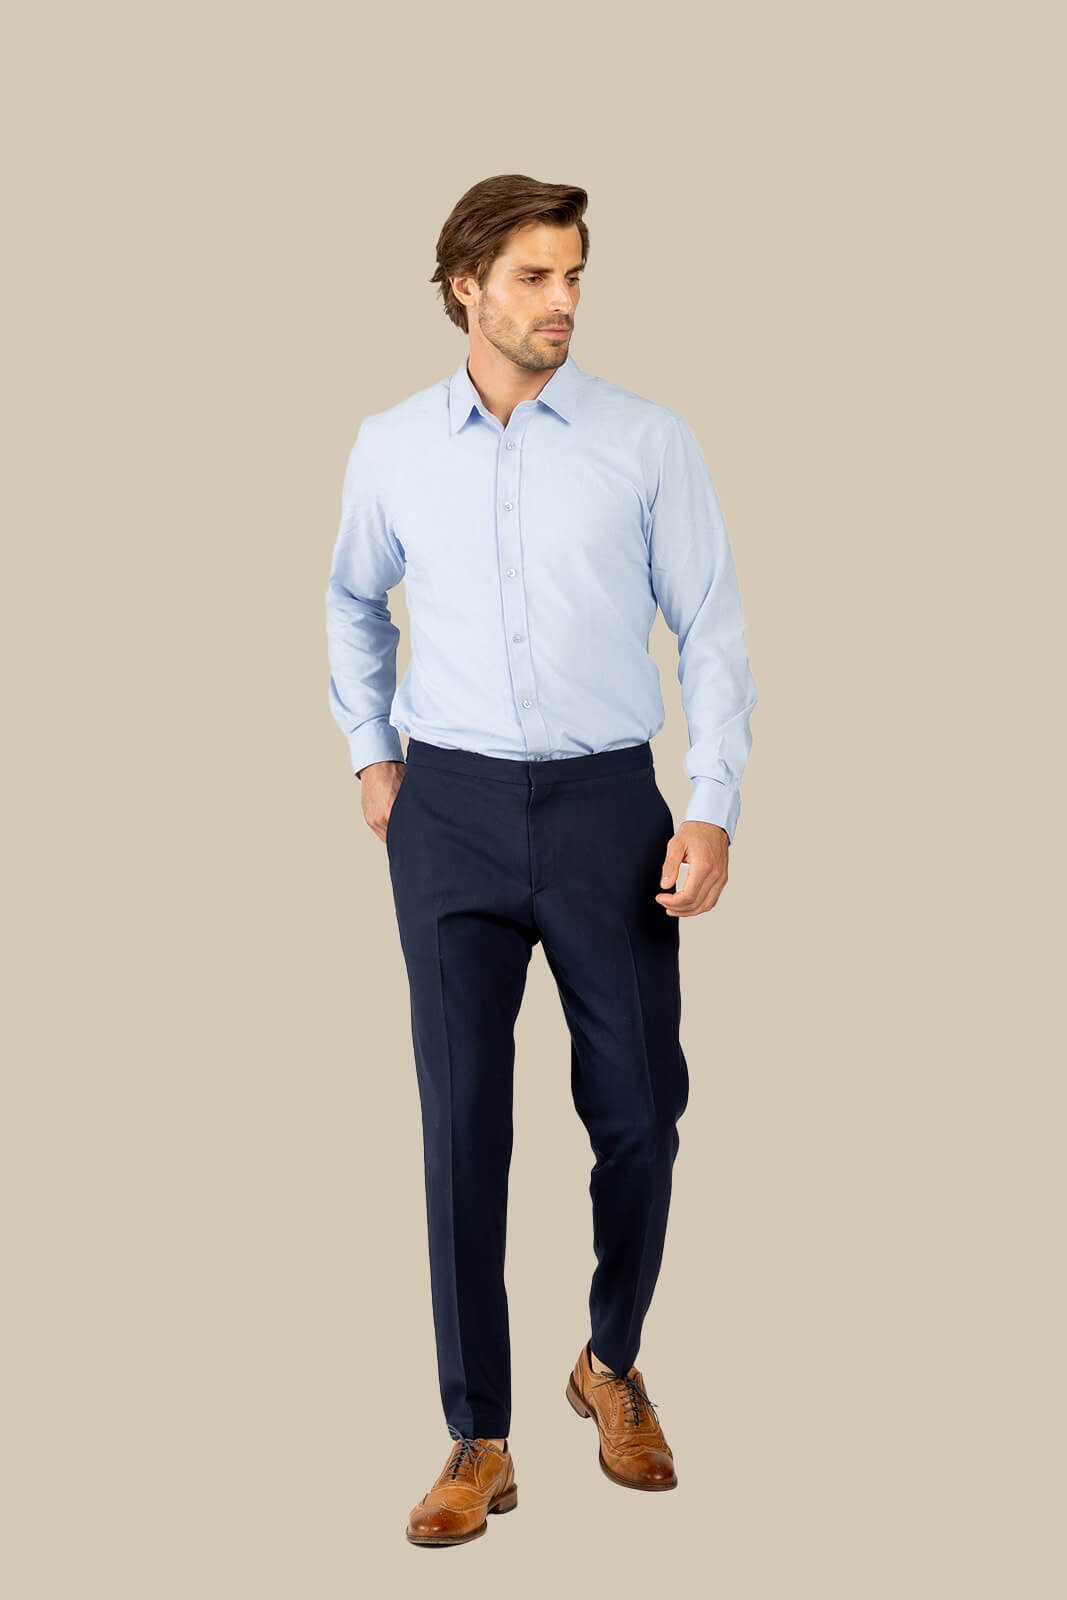 Light Blue Blazer Light Blue Dress Shirt Khaki Pants Suede Ankle Boots  White Belt - Men's Fashion For Less